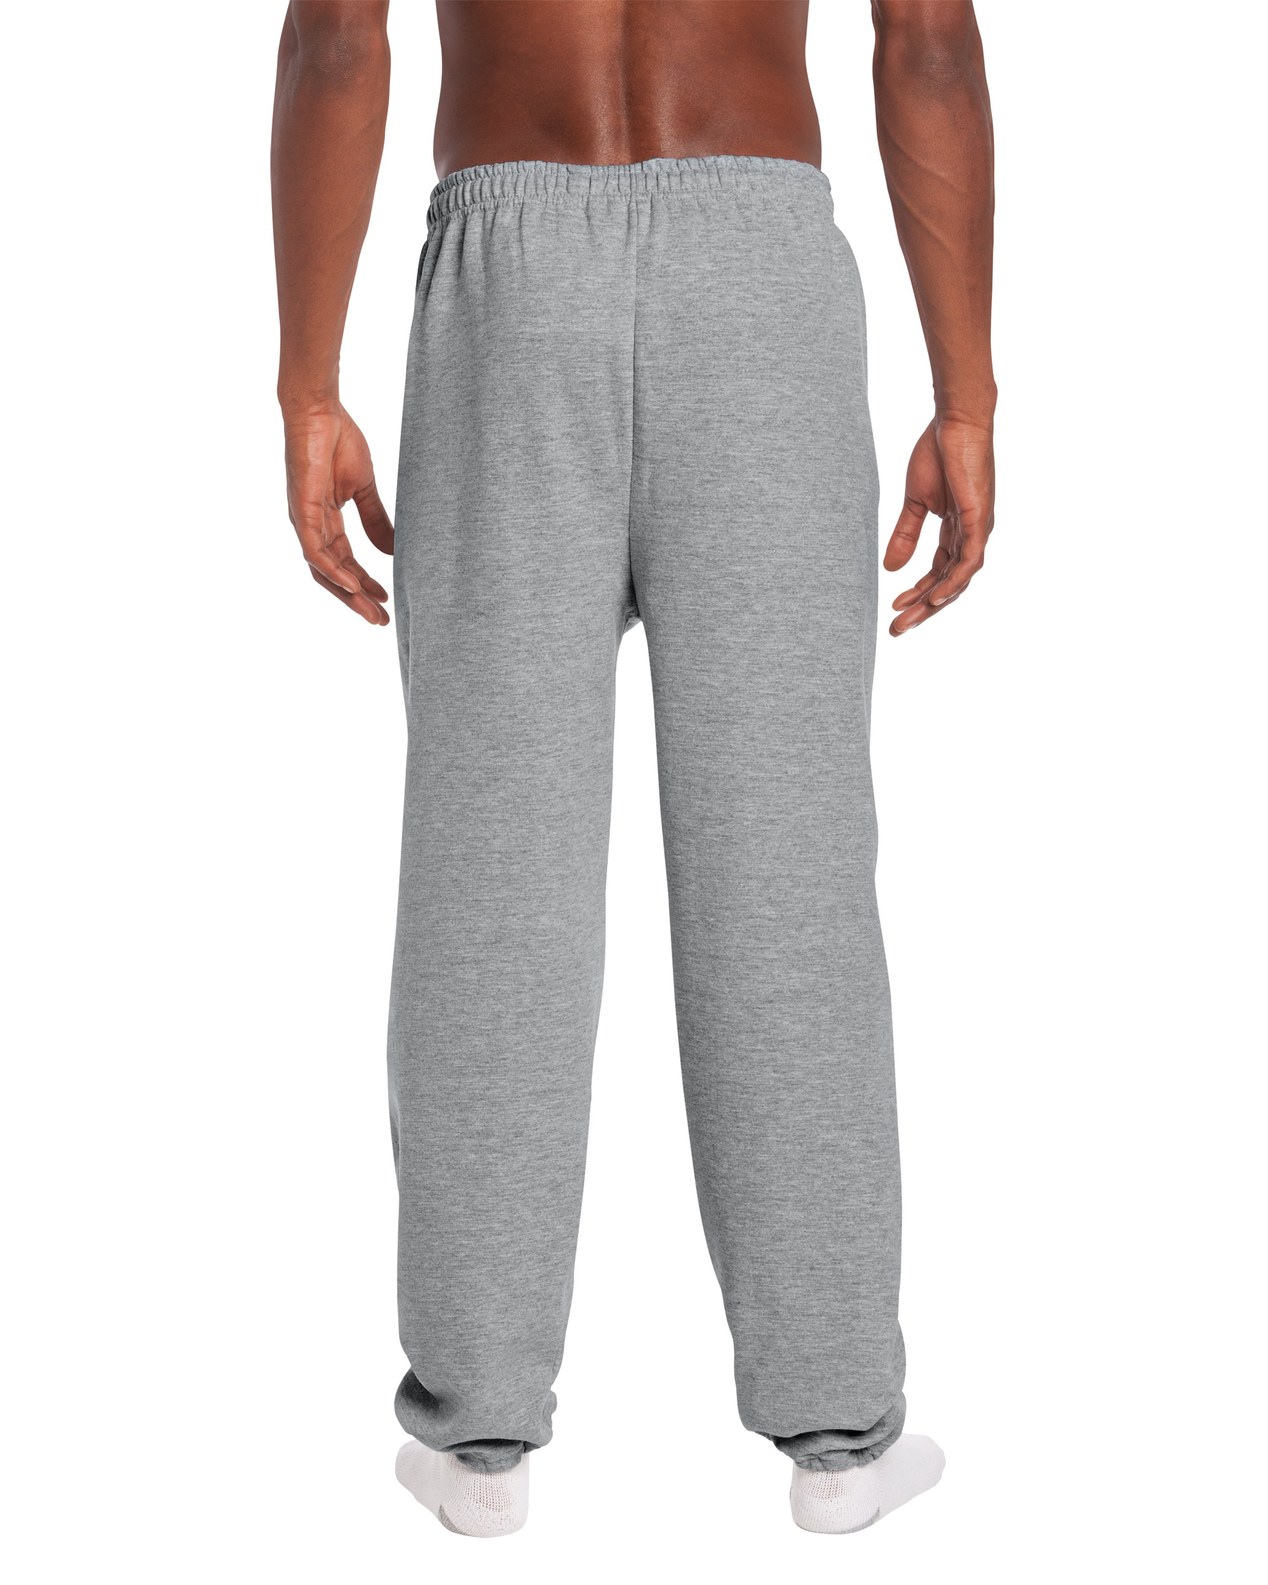 Gildan Adult Sweatpants, sports gray, Sizes: Small, Medium, Large and Extra Large